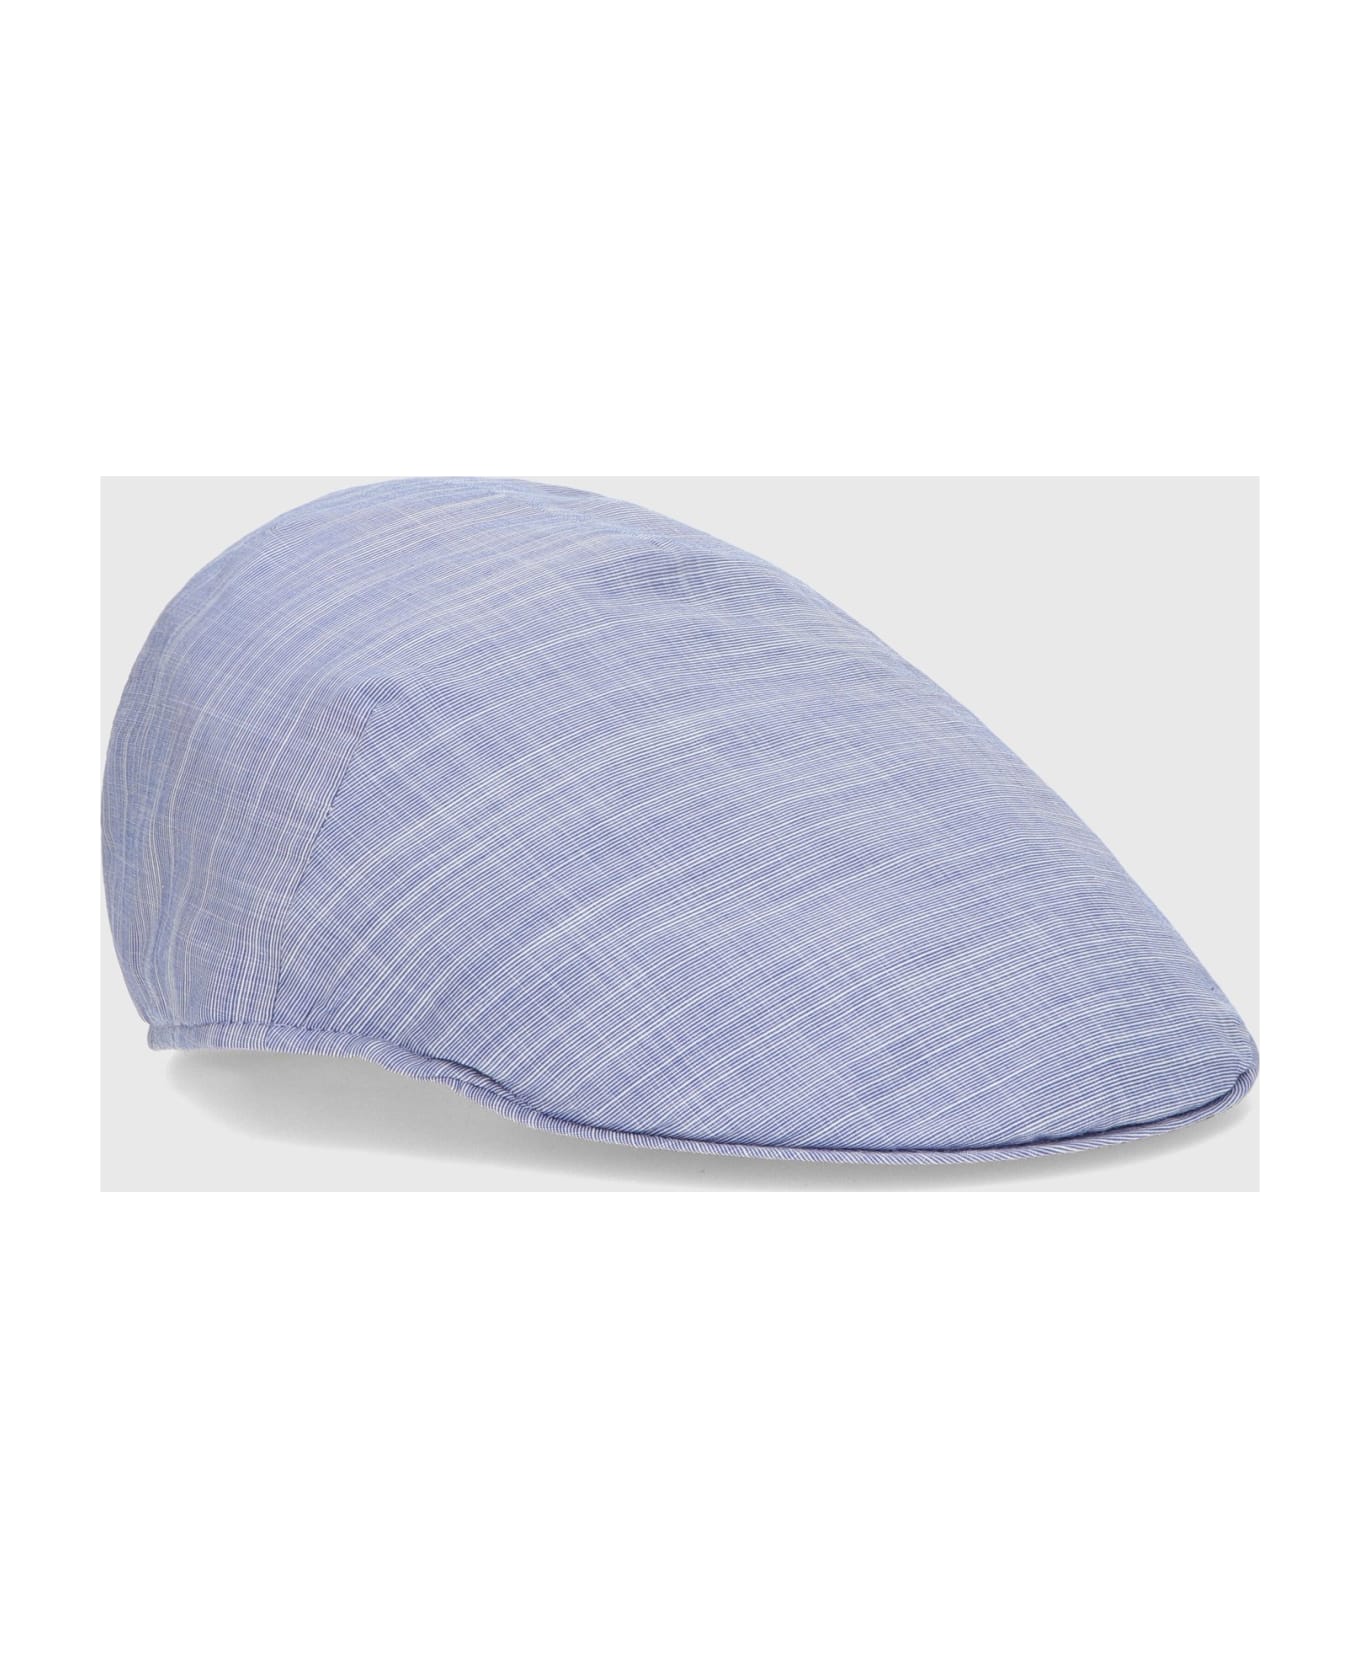 Borsalino Parigi Duckbill Flat Cap - BLUE 帽子